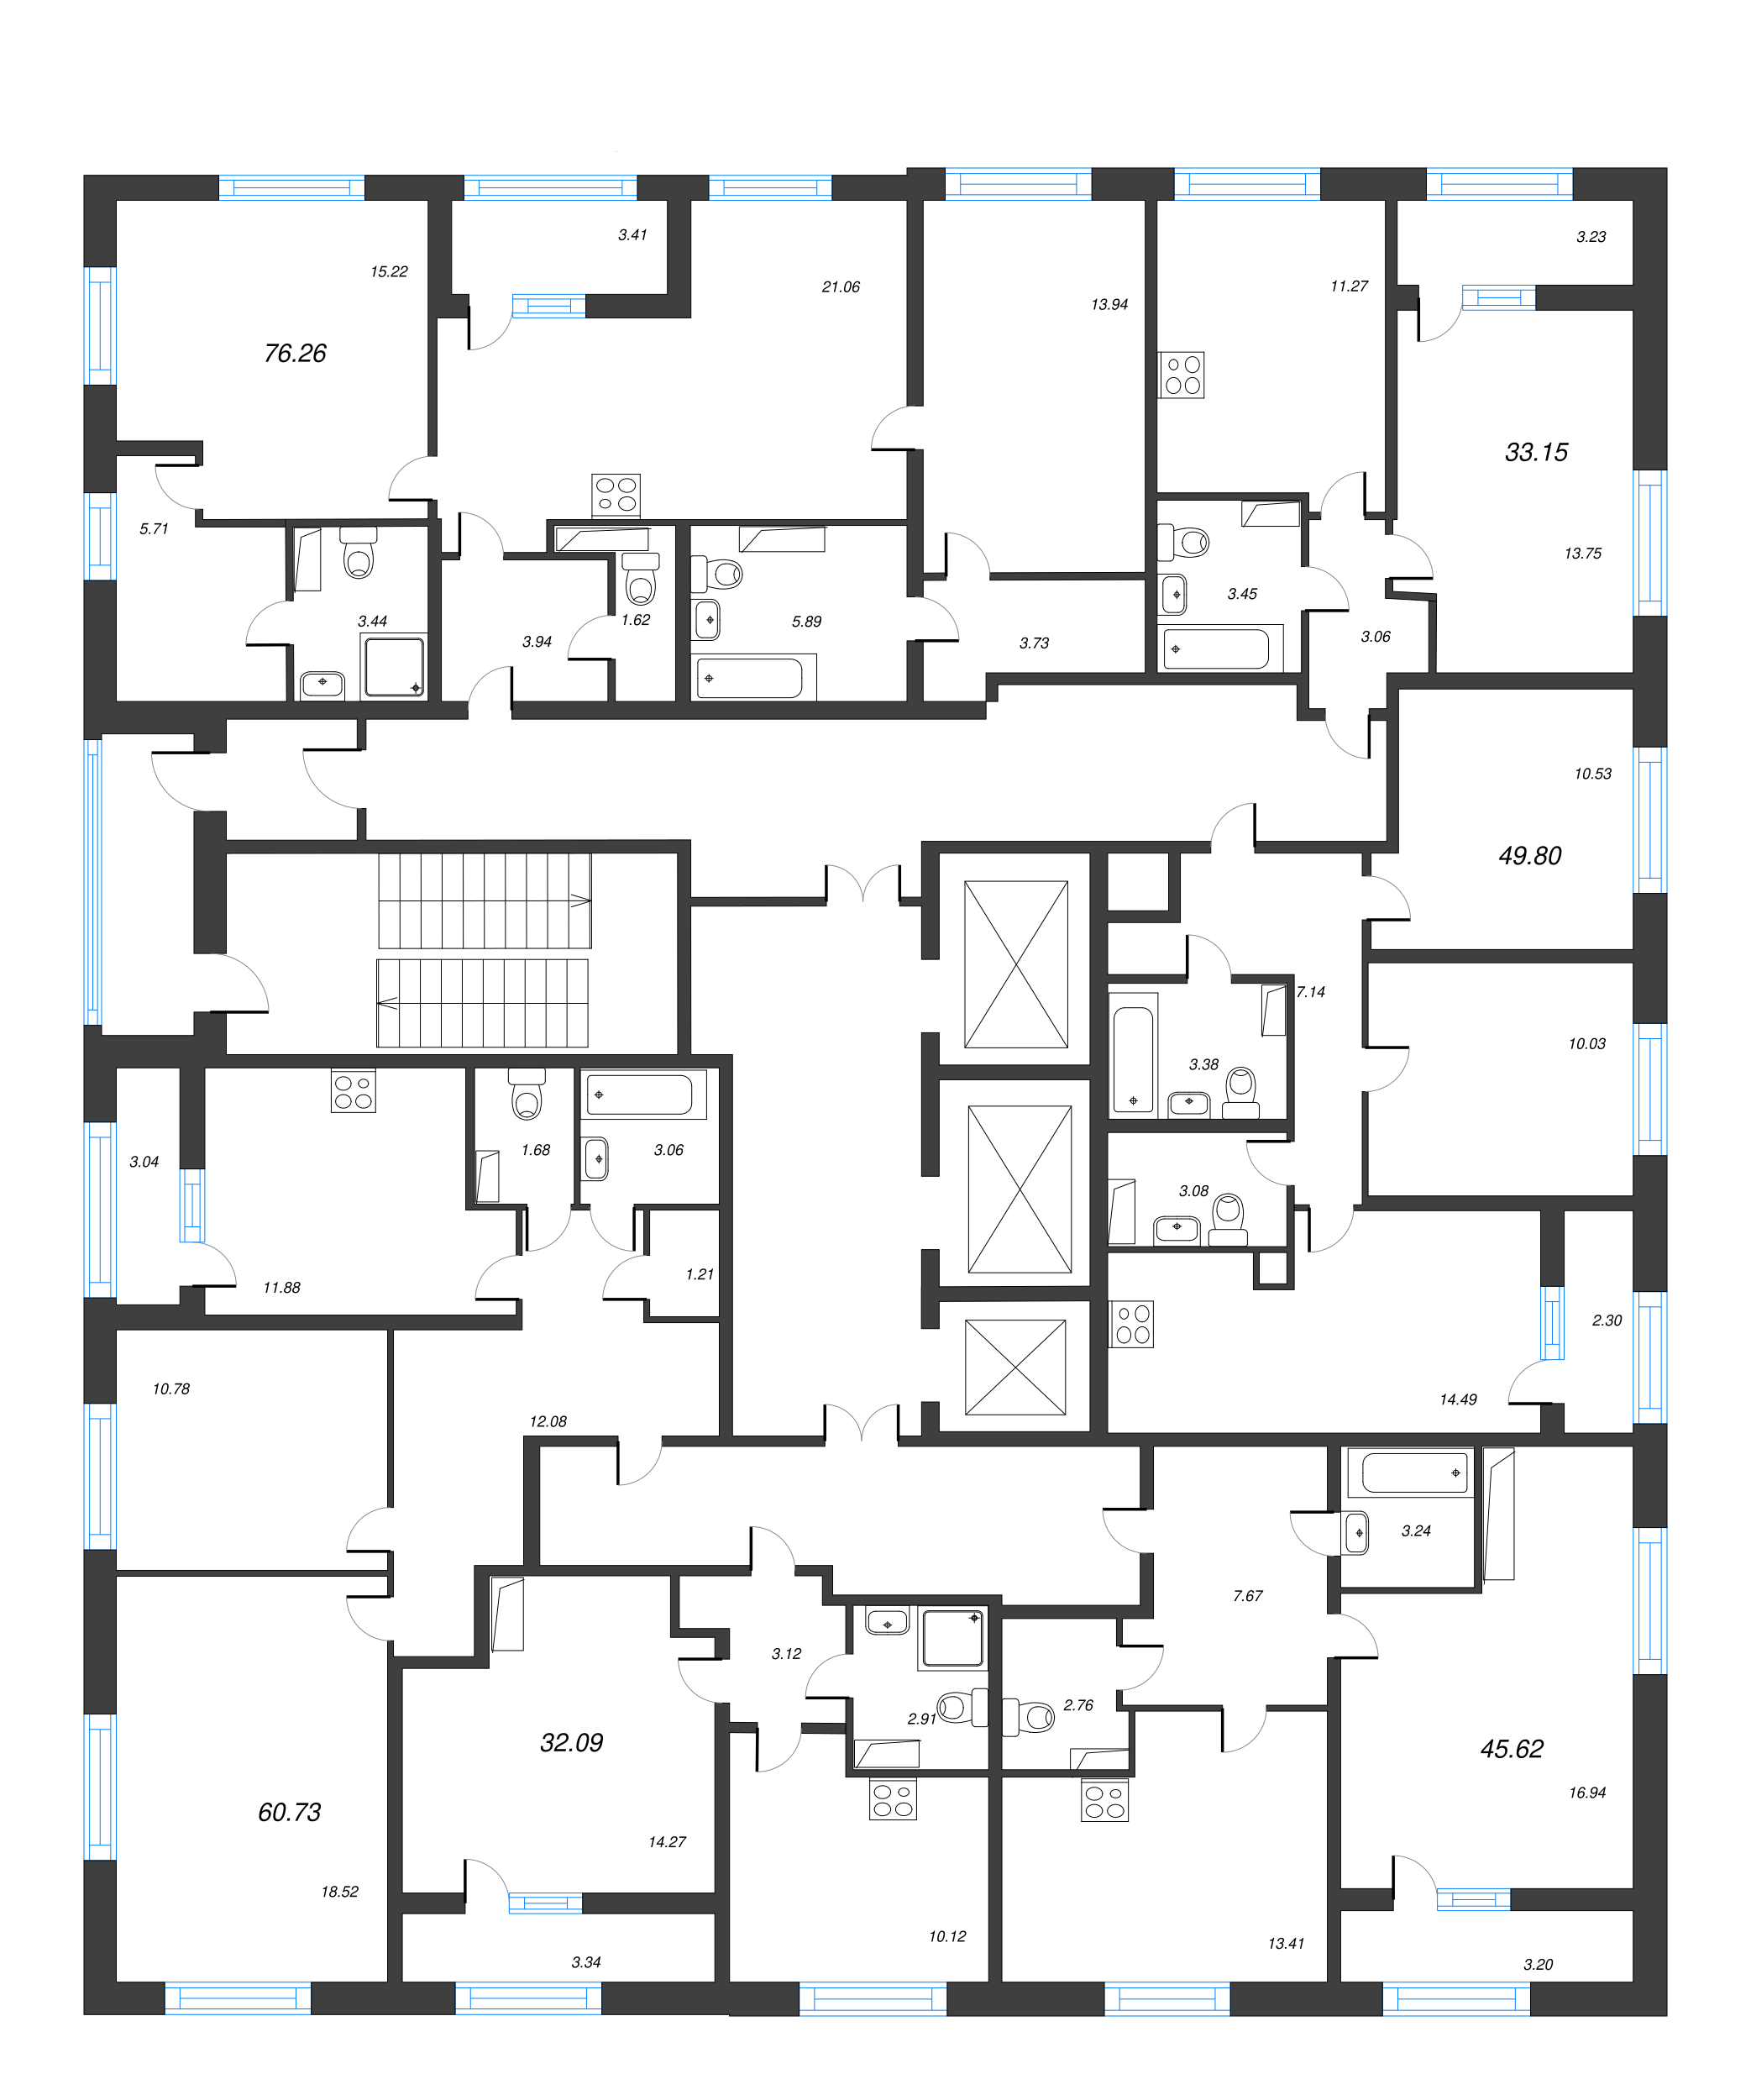 3-комнатная (Евро) квартира, 76.26 м² - планировка этажа